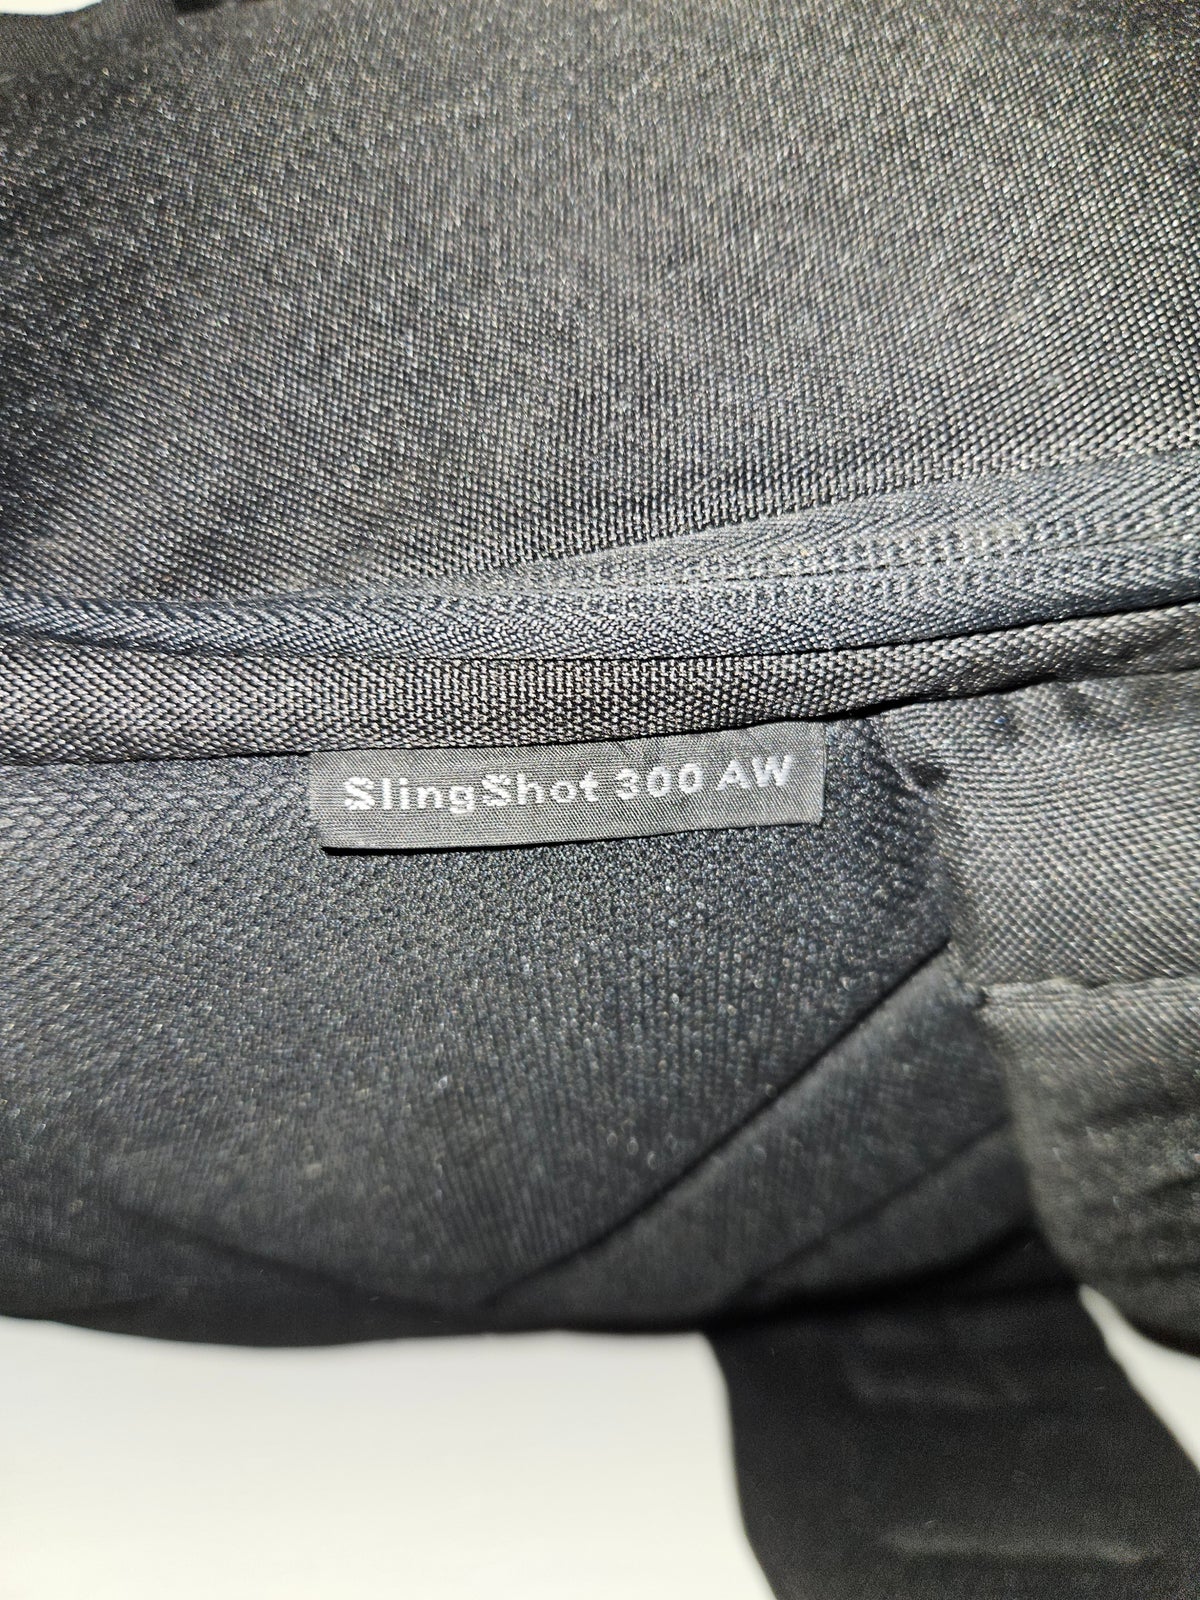 Kamera taske, Lowepro, Slingshot 300aw